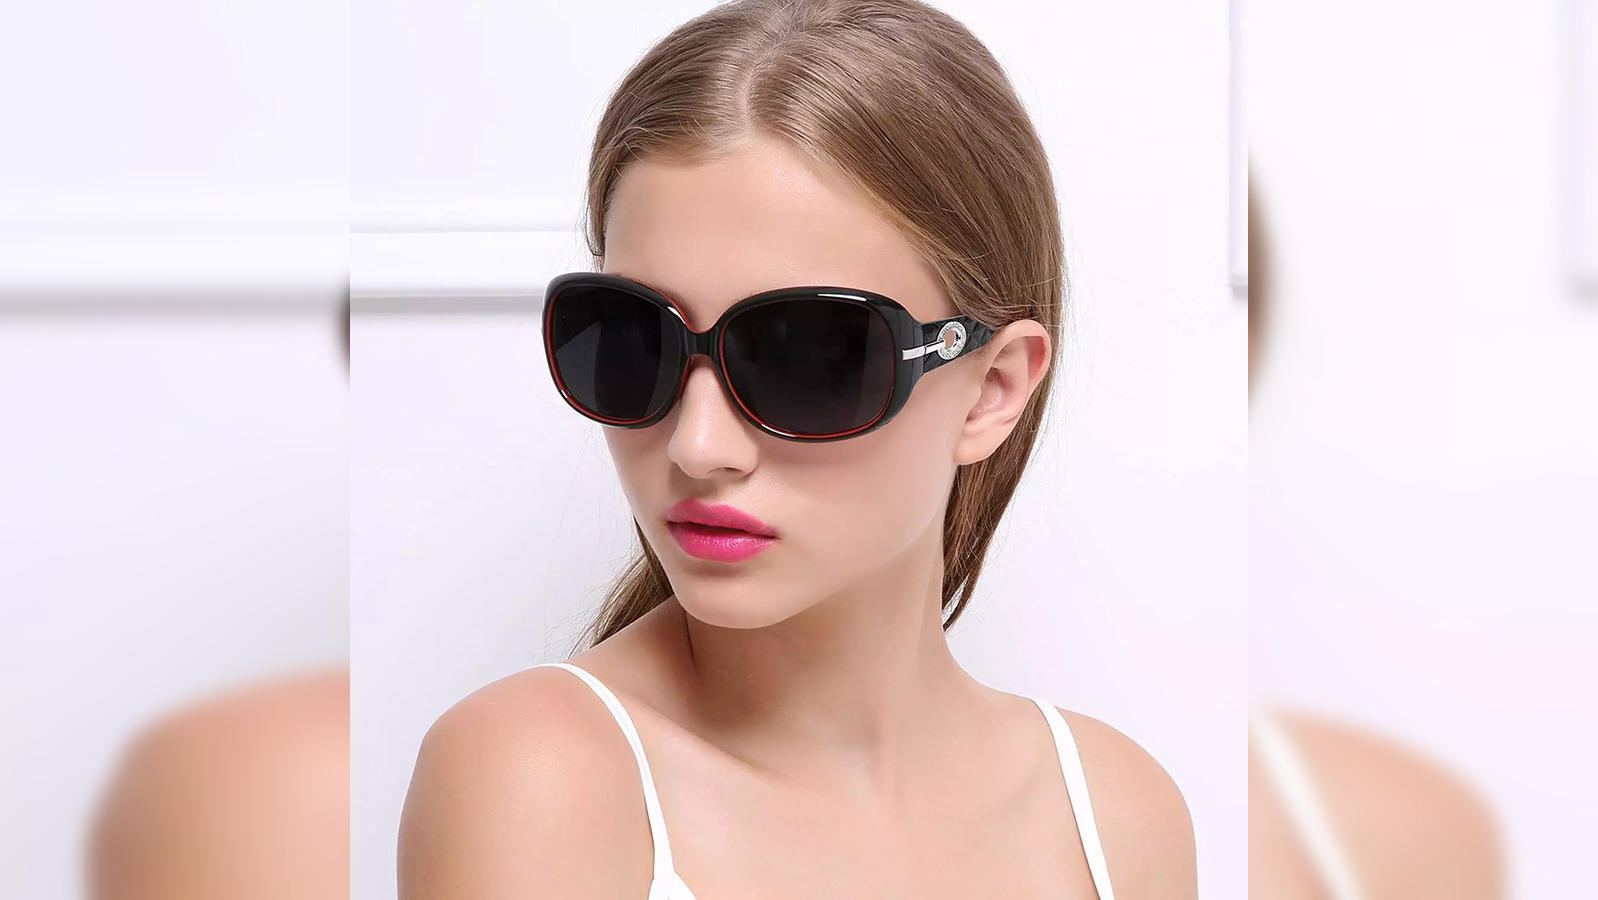 Amazon.com: XLUMIO Oversized Sunglasses Black Gold Striped Square Sun  Glasses For Men Women Shades,Black Gray,one size : Sports & Outdoors